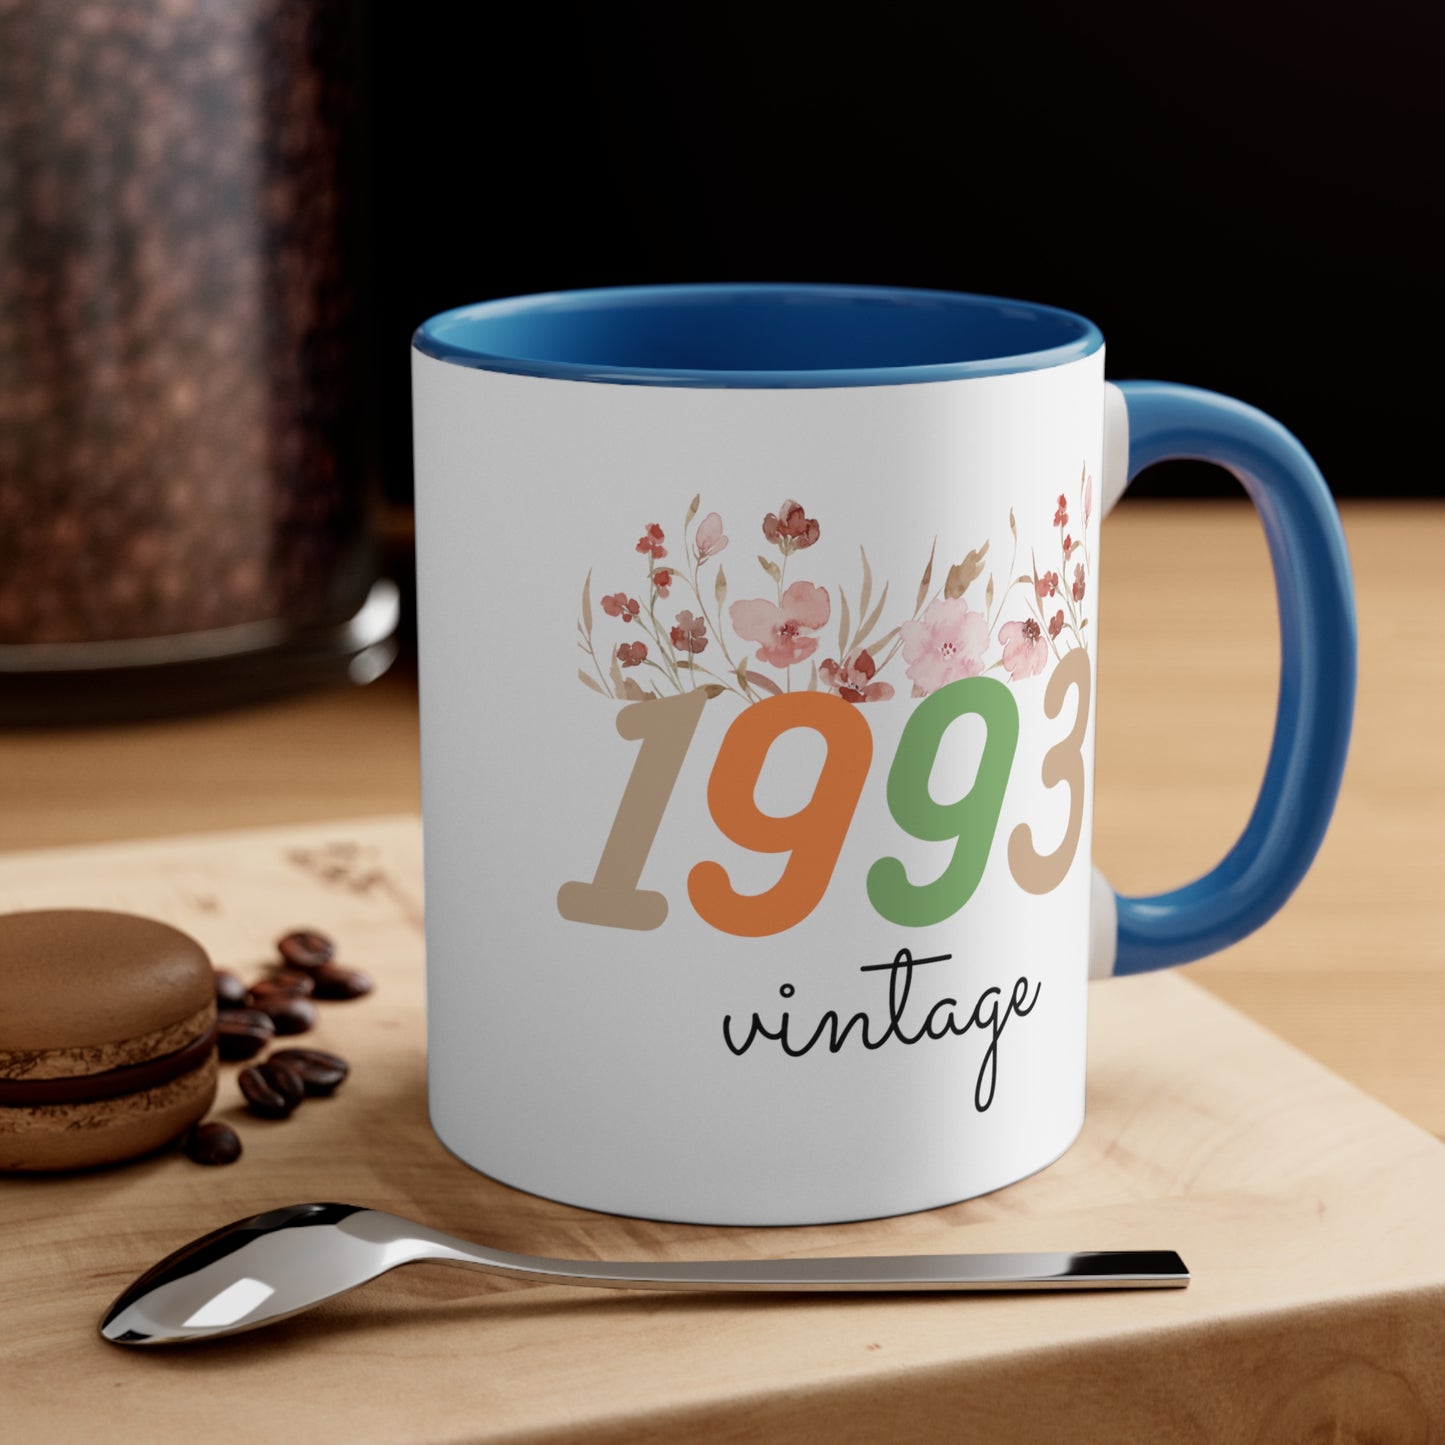 1993 Vintage Birthday Accent Coffee Mug, 11oz